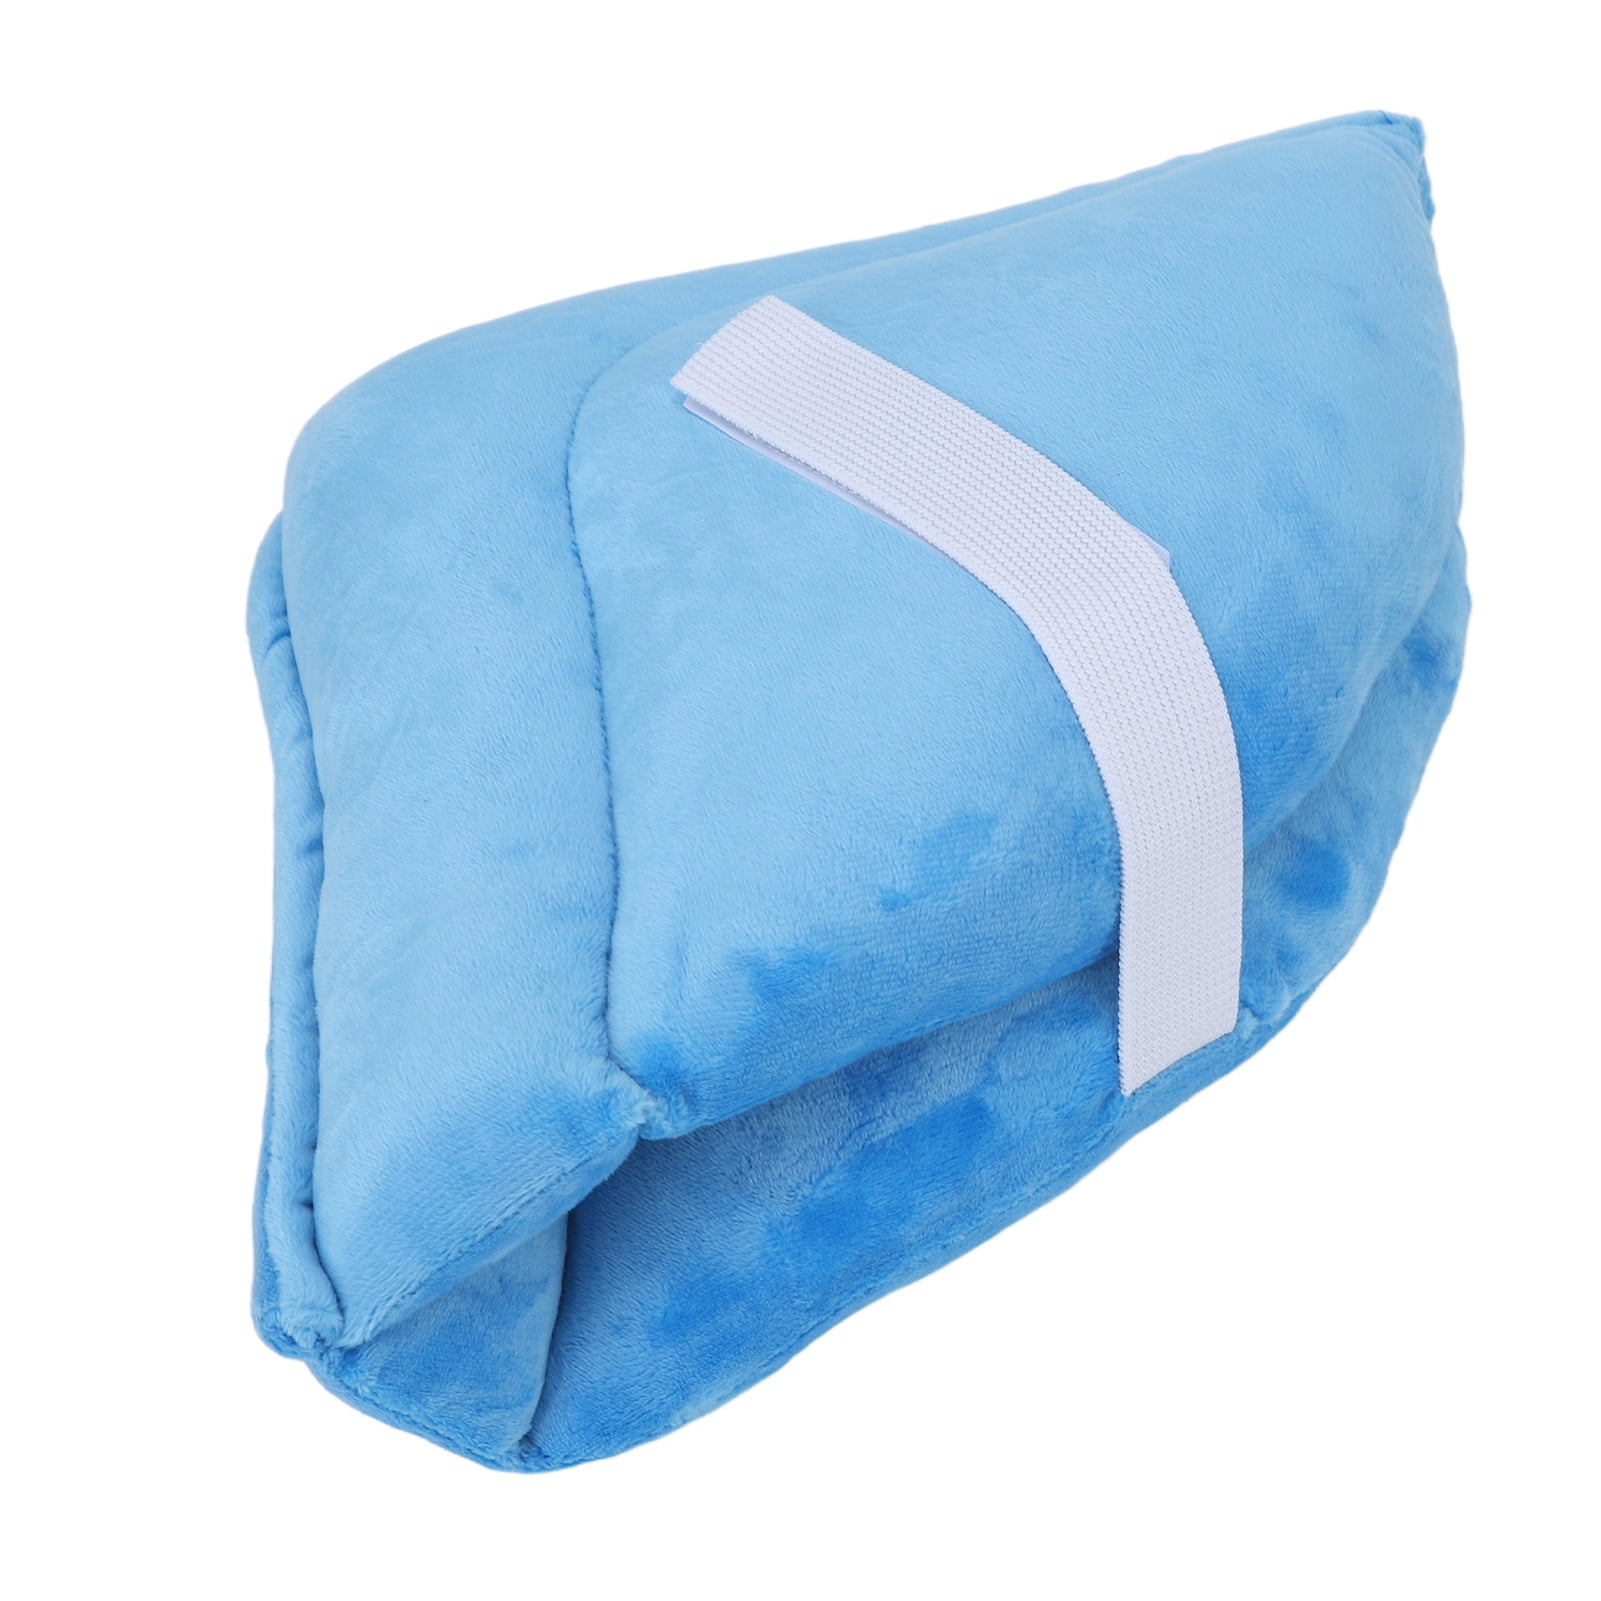 Skil-Care Heel Float - Heel Protector Pressure Relieving Pillow Boot